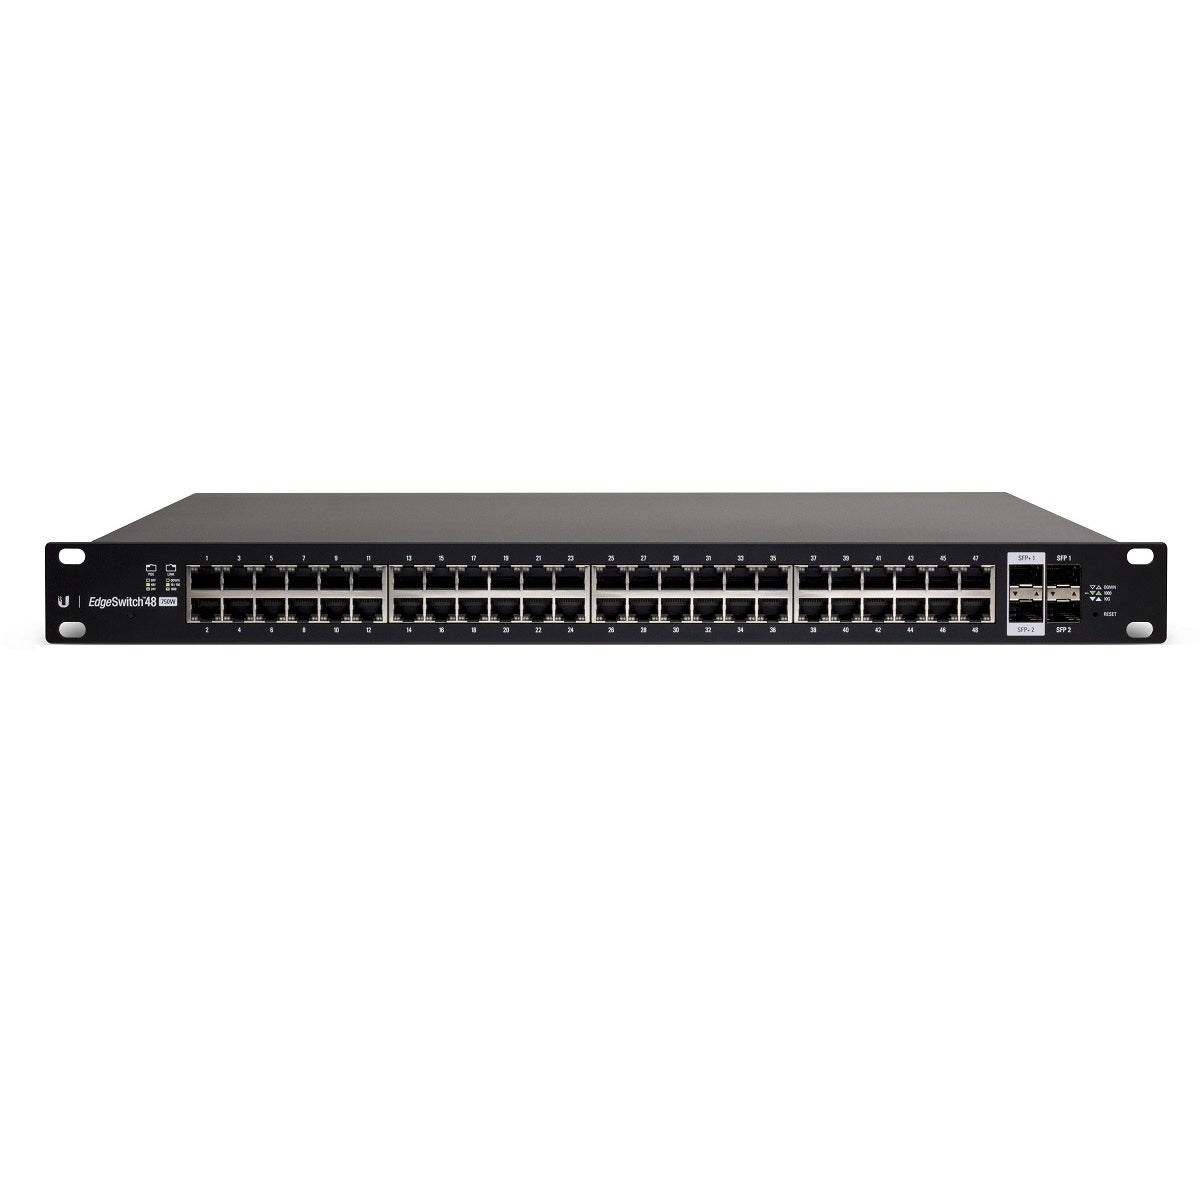 Ubiquiti ES-48-750W Networking Switch